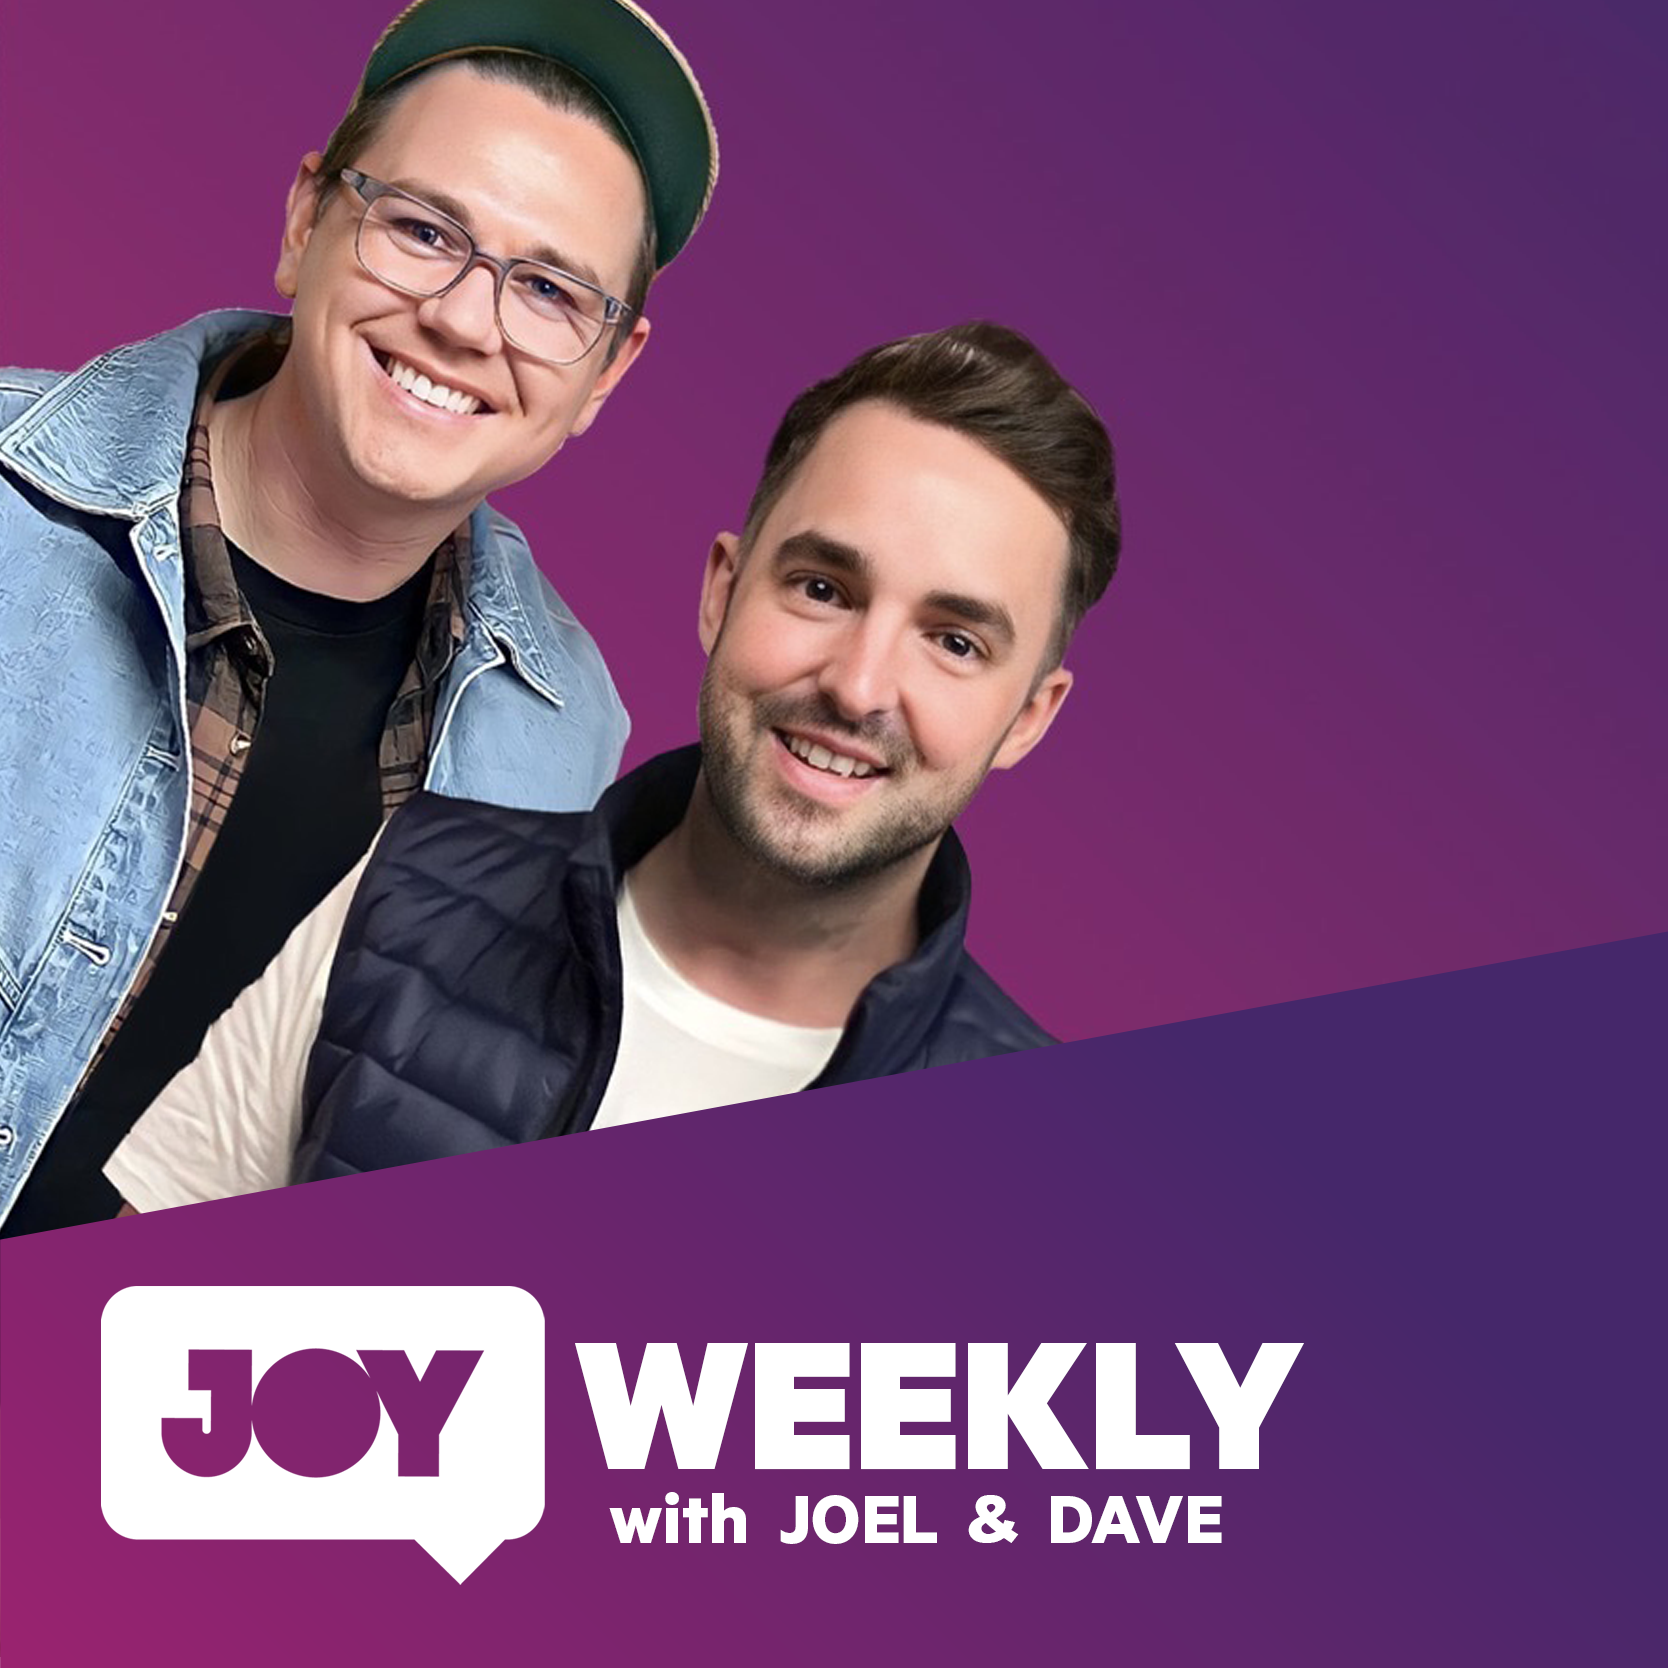 JOY Weekly’s 50th Episode Bash!! – JW213